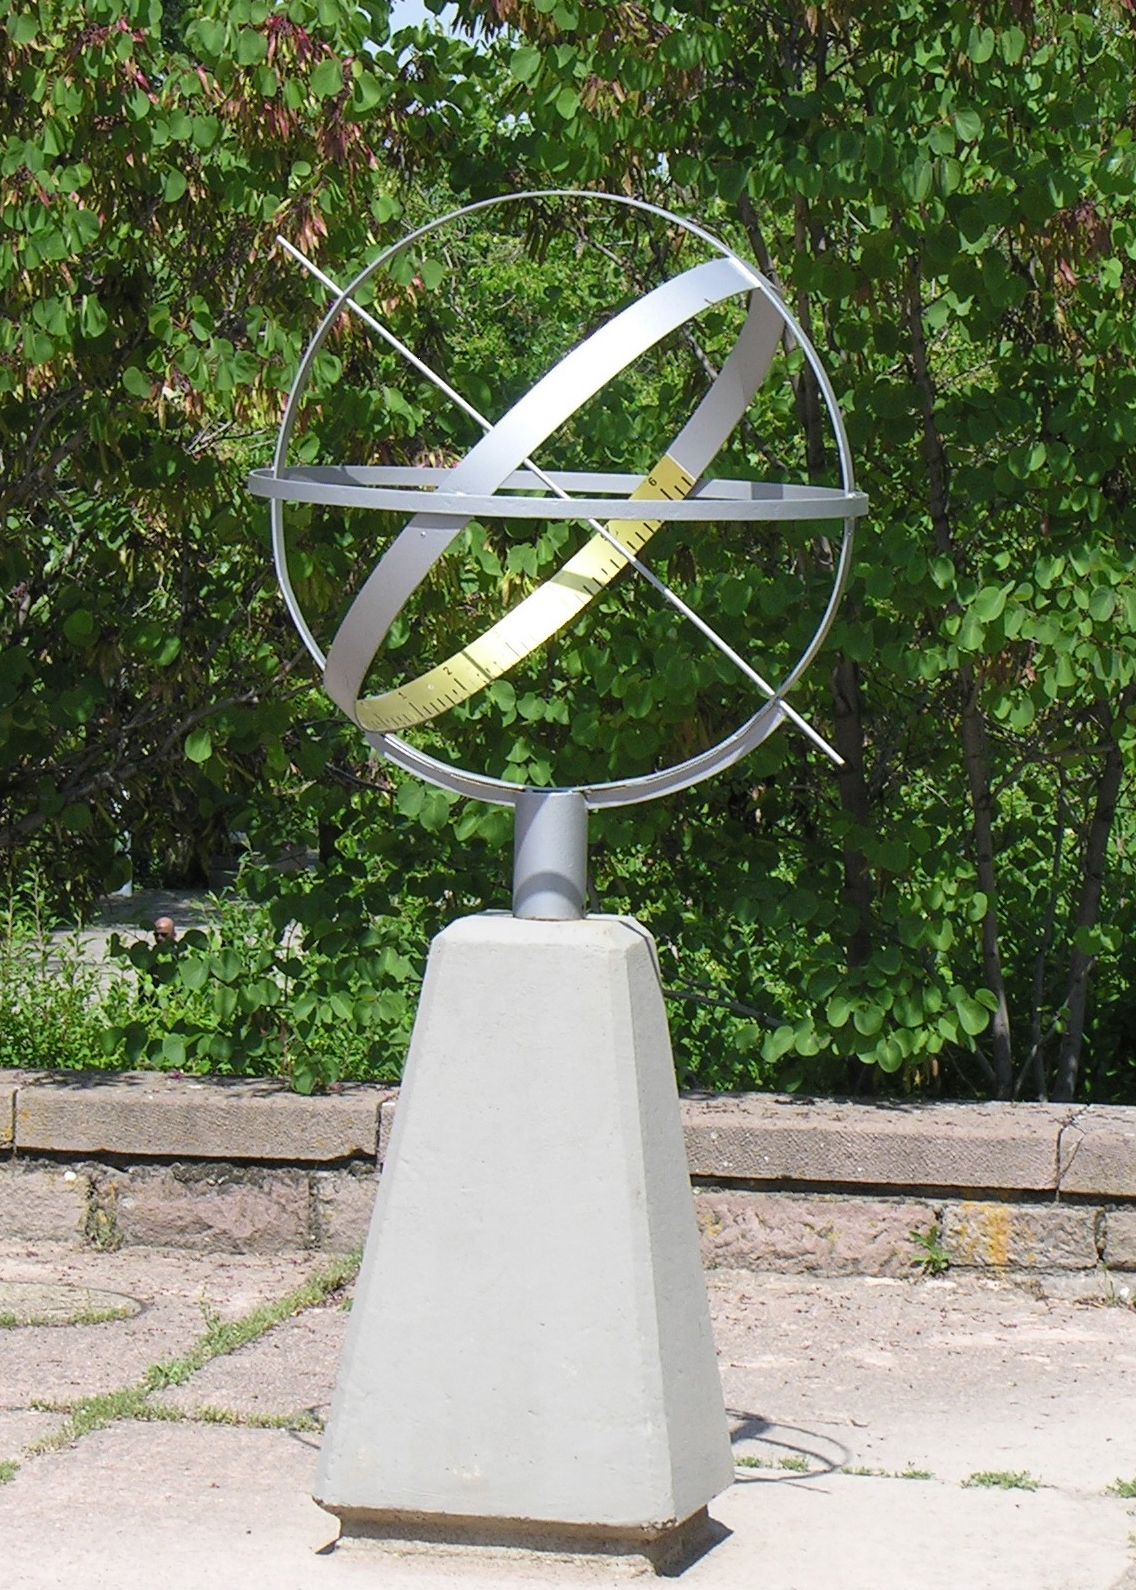 Amateur Astronomy Community, Shadow Clock